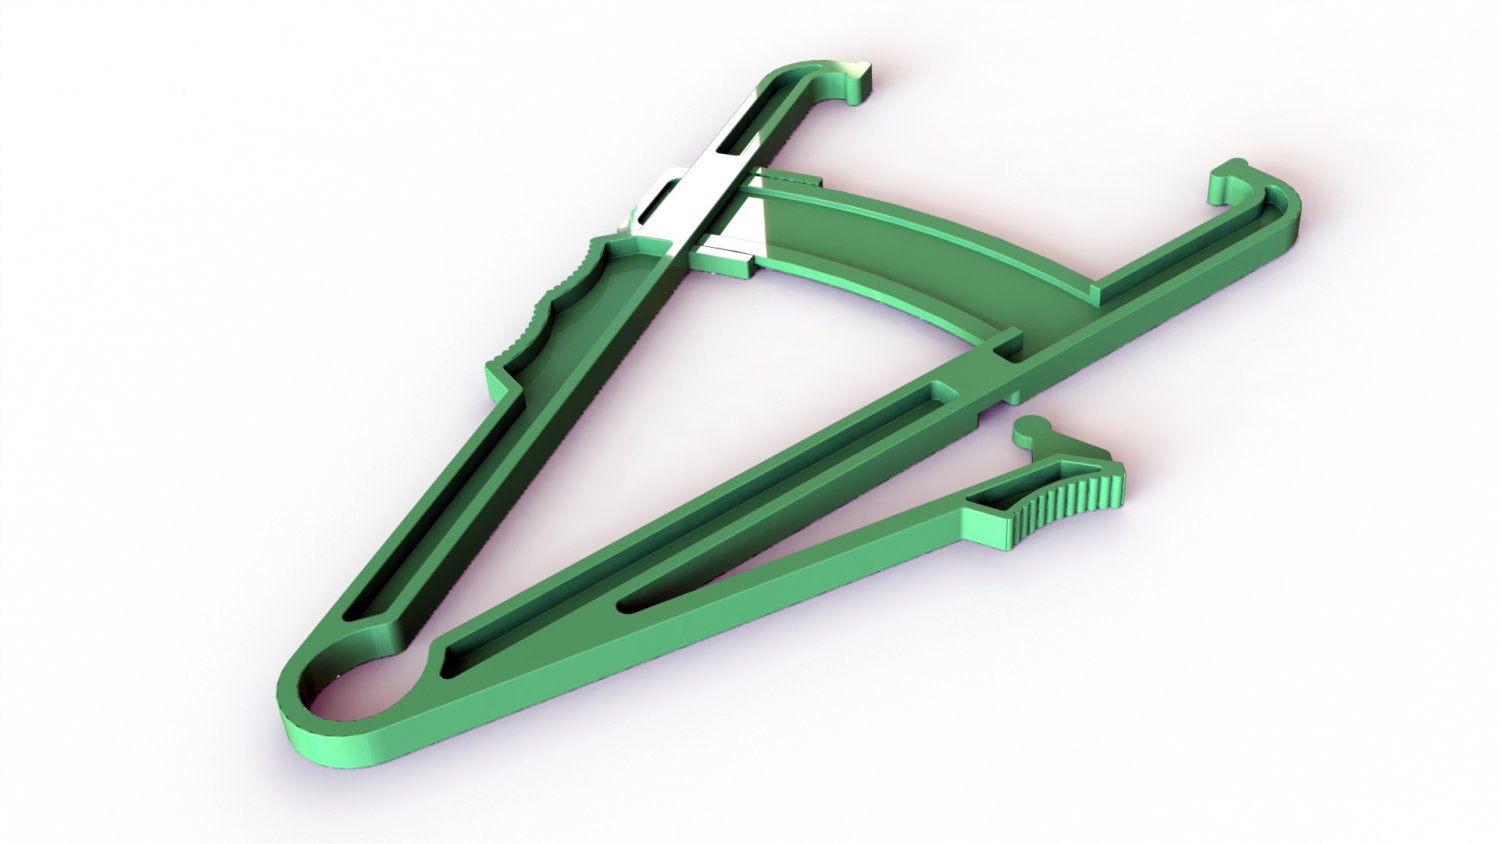 3D Printed Body fat caliper by mikael_wingård